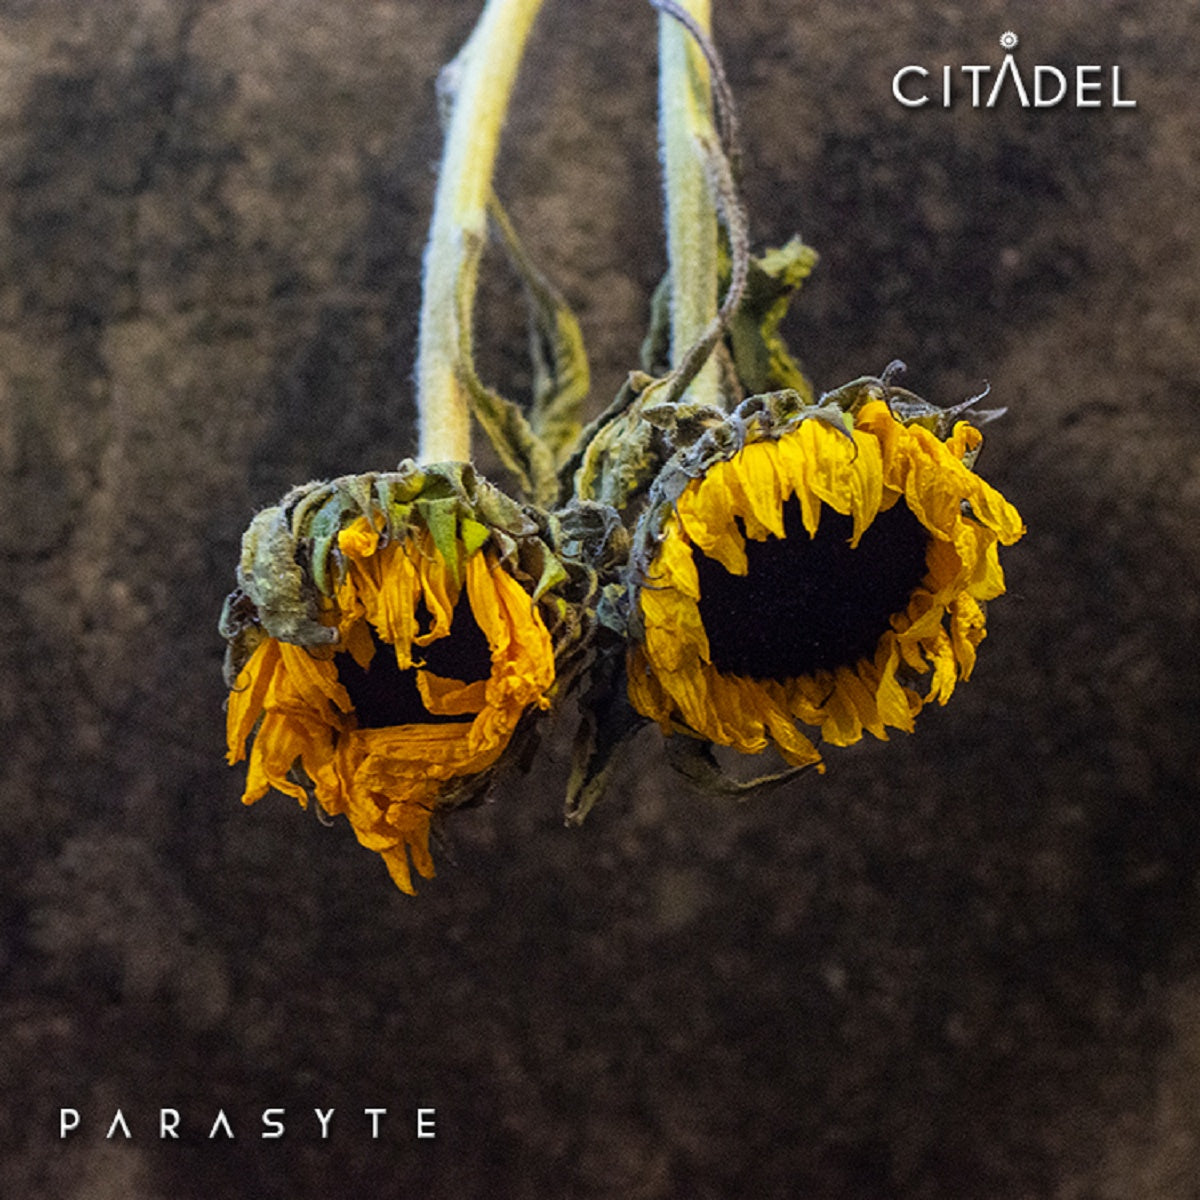 Citadel - 'Parasyte'